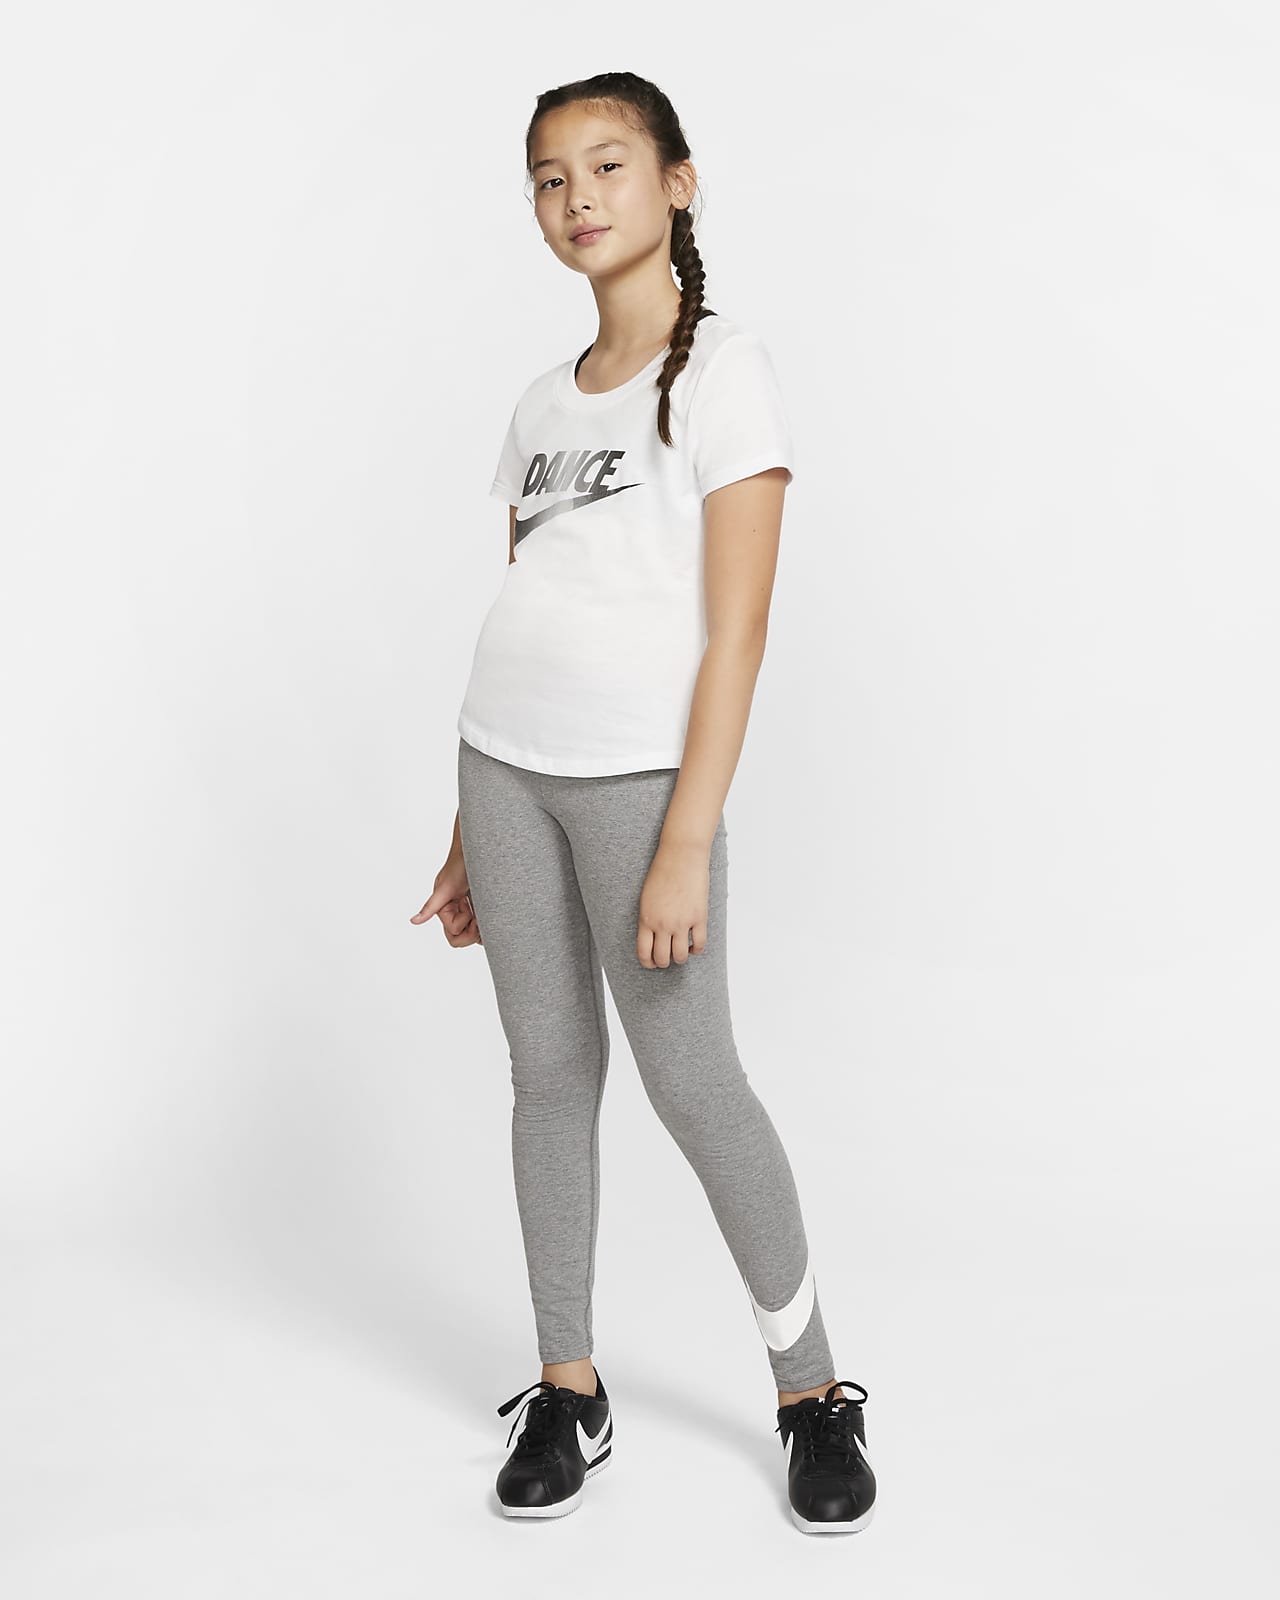 Legging avec logo Swoosh Nike Sportswear Favorites pour Fille plus âgée